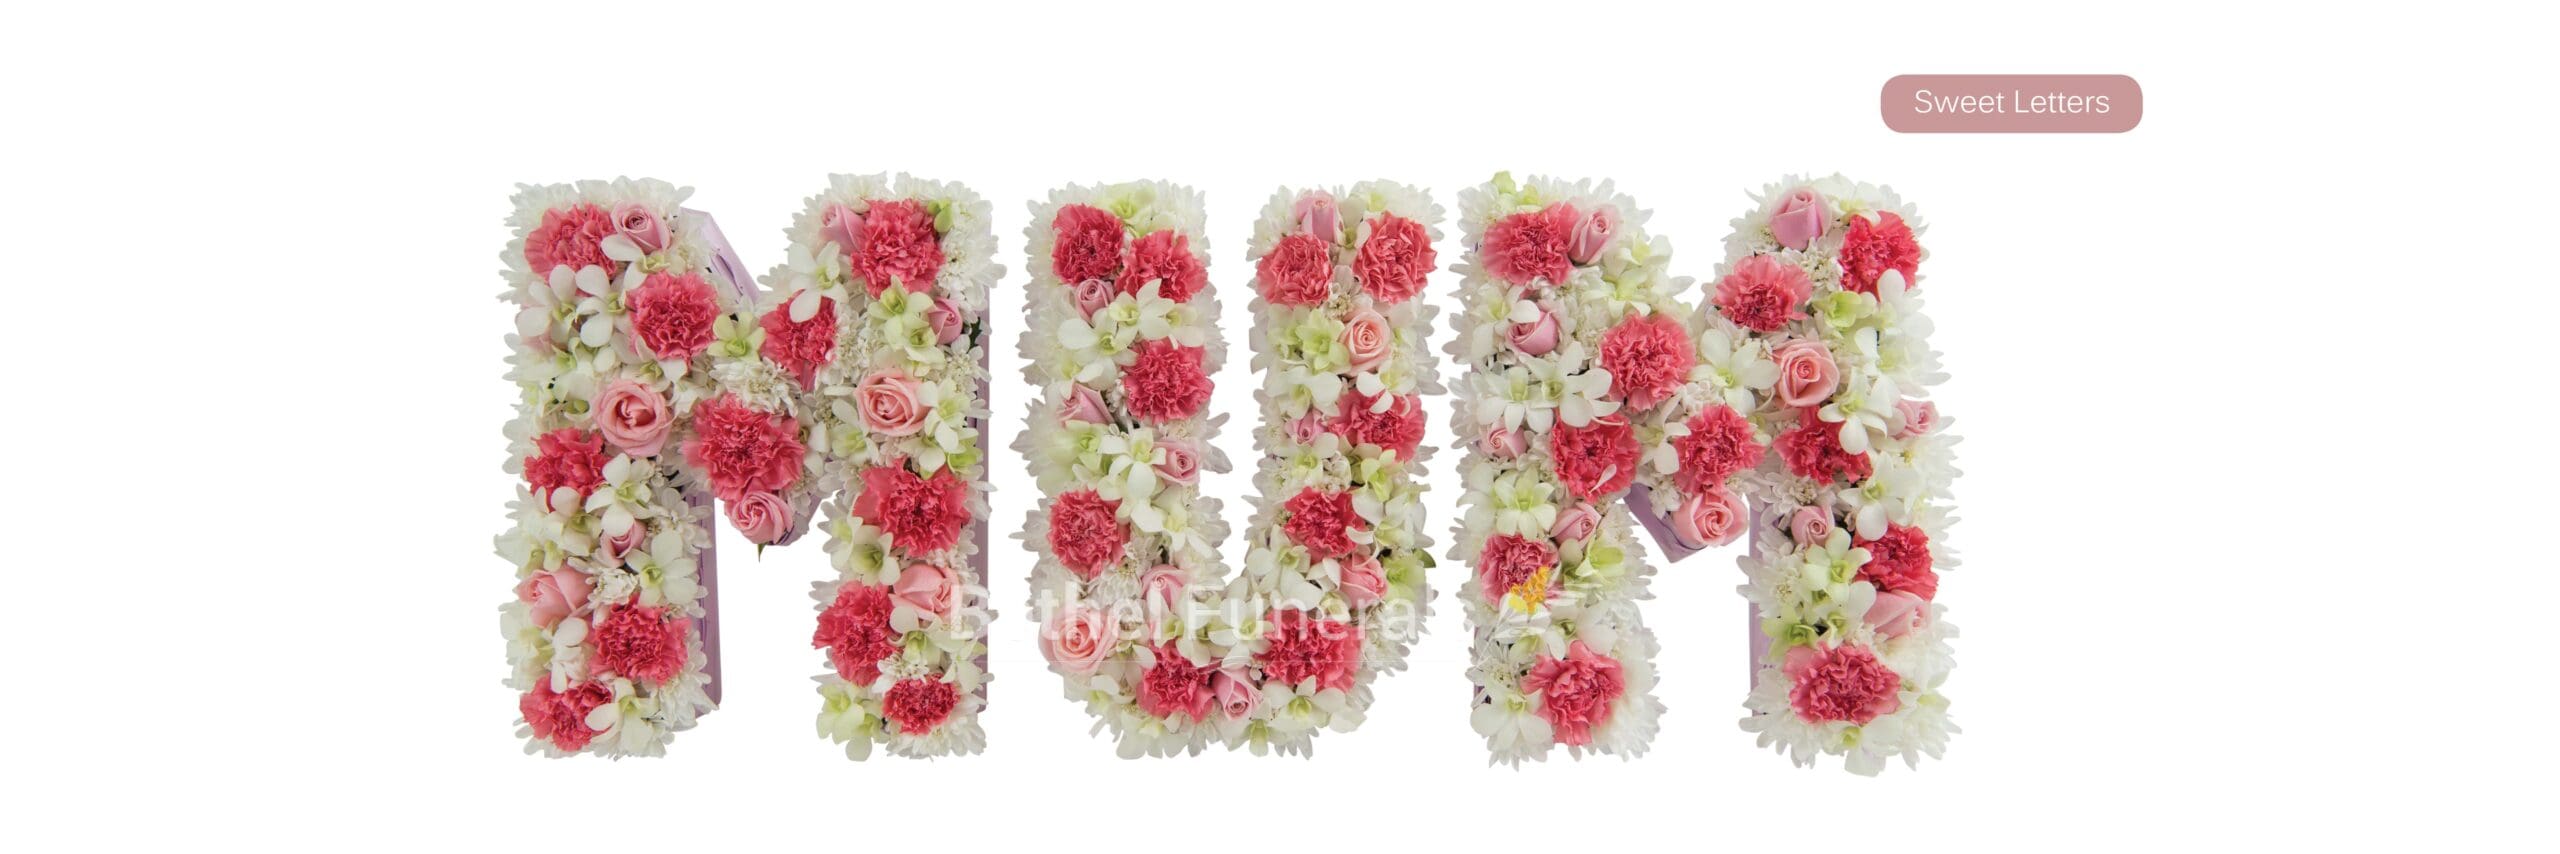 sweet letters funeral flowers